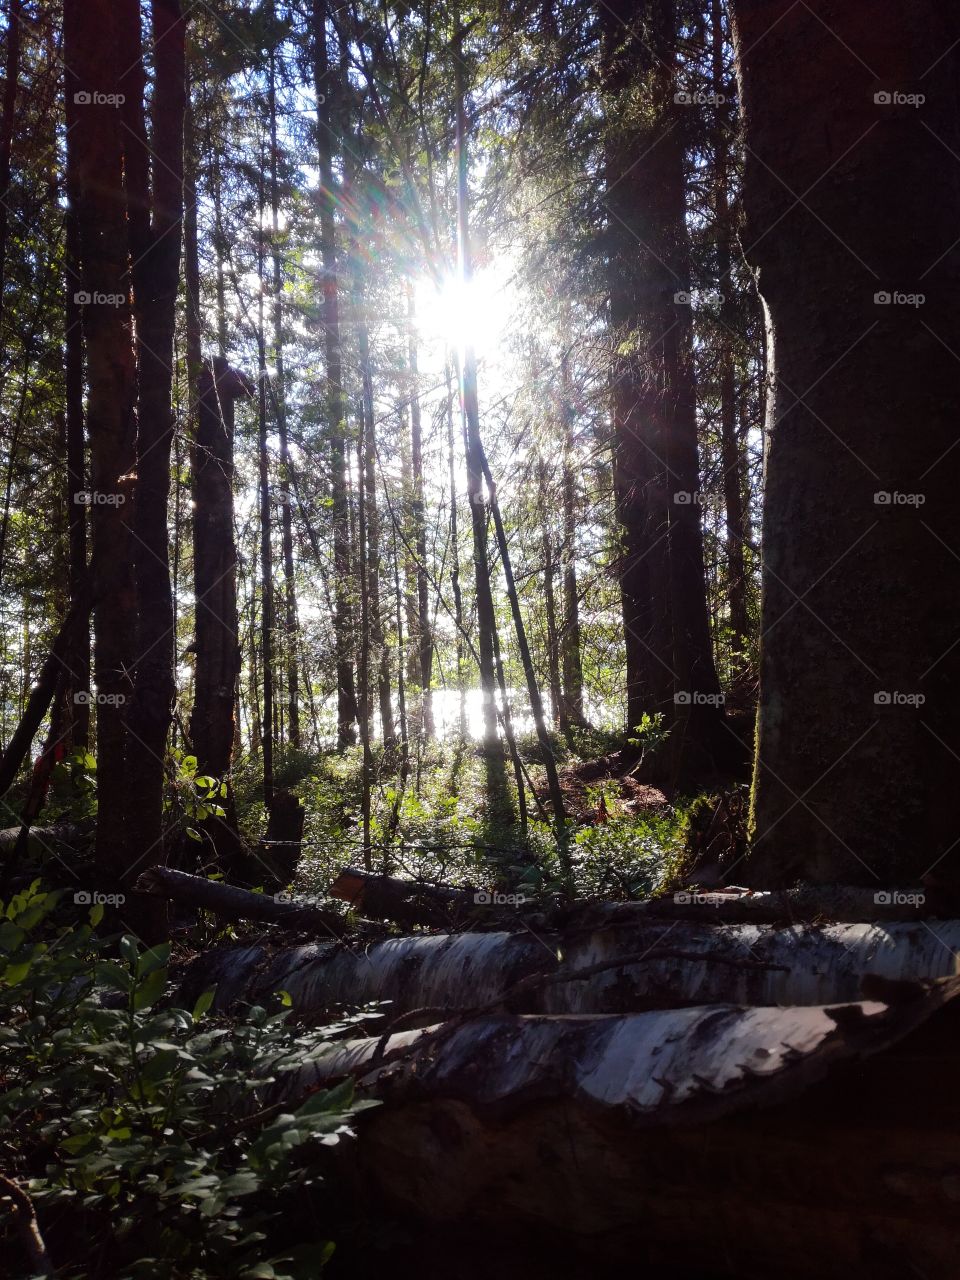 Sunlight peeking through forest